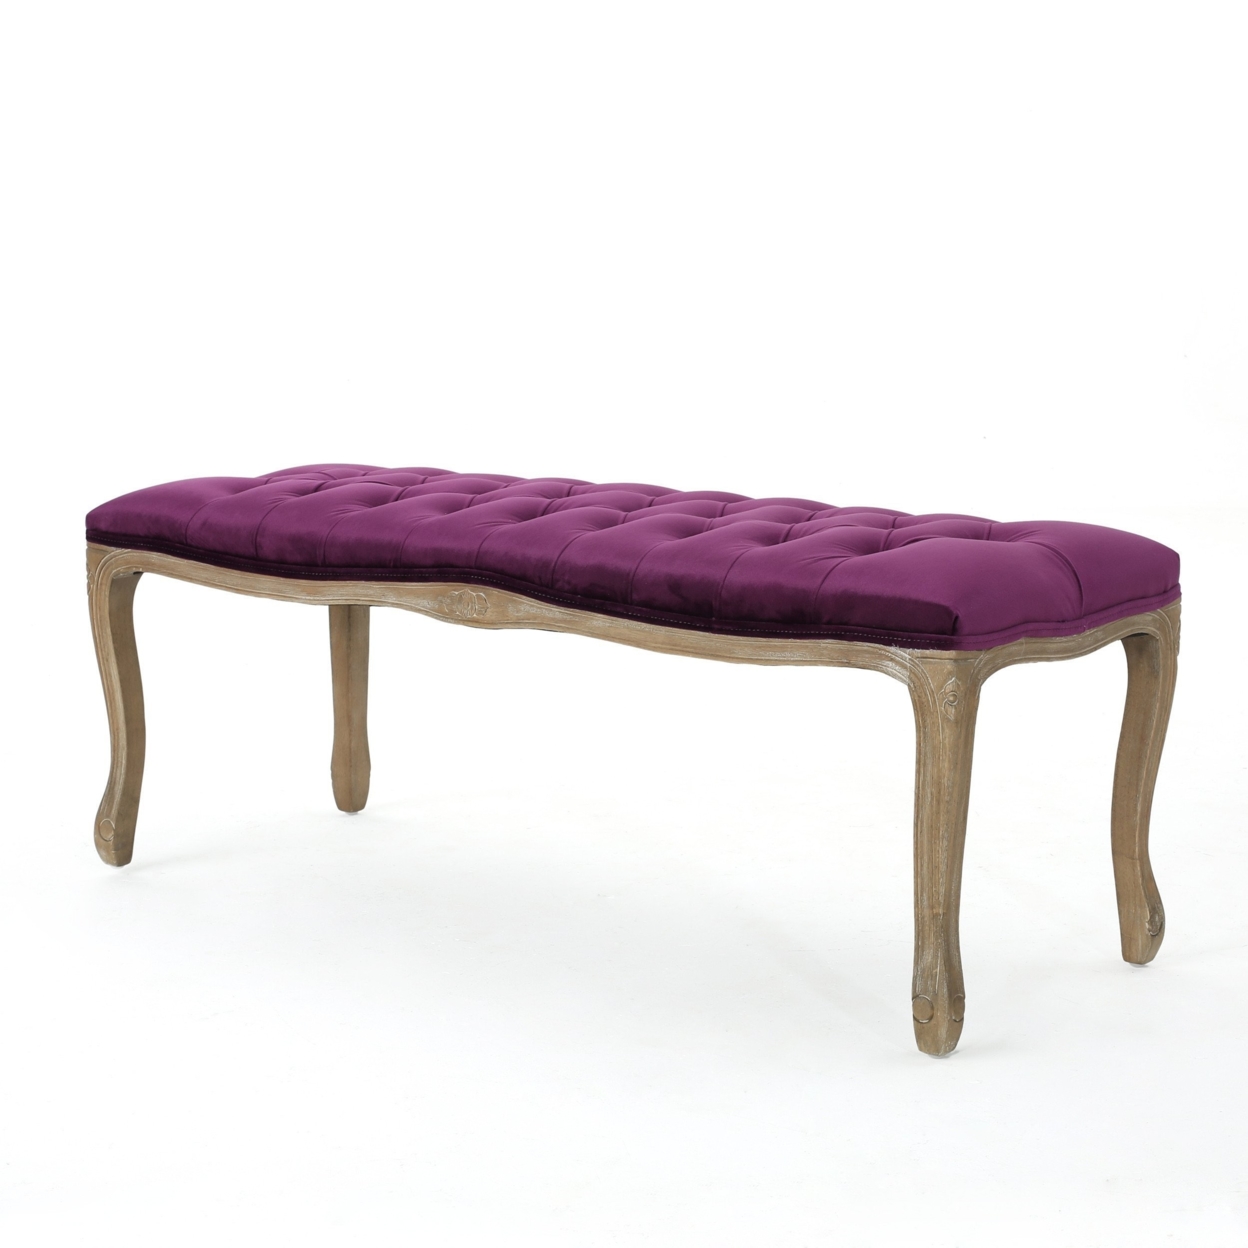 Talia Elegant Tufted New Velvet Blush Cushion Bench - Blush